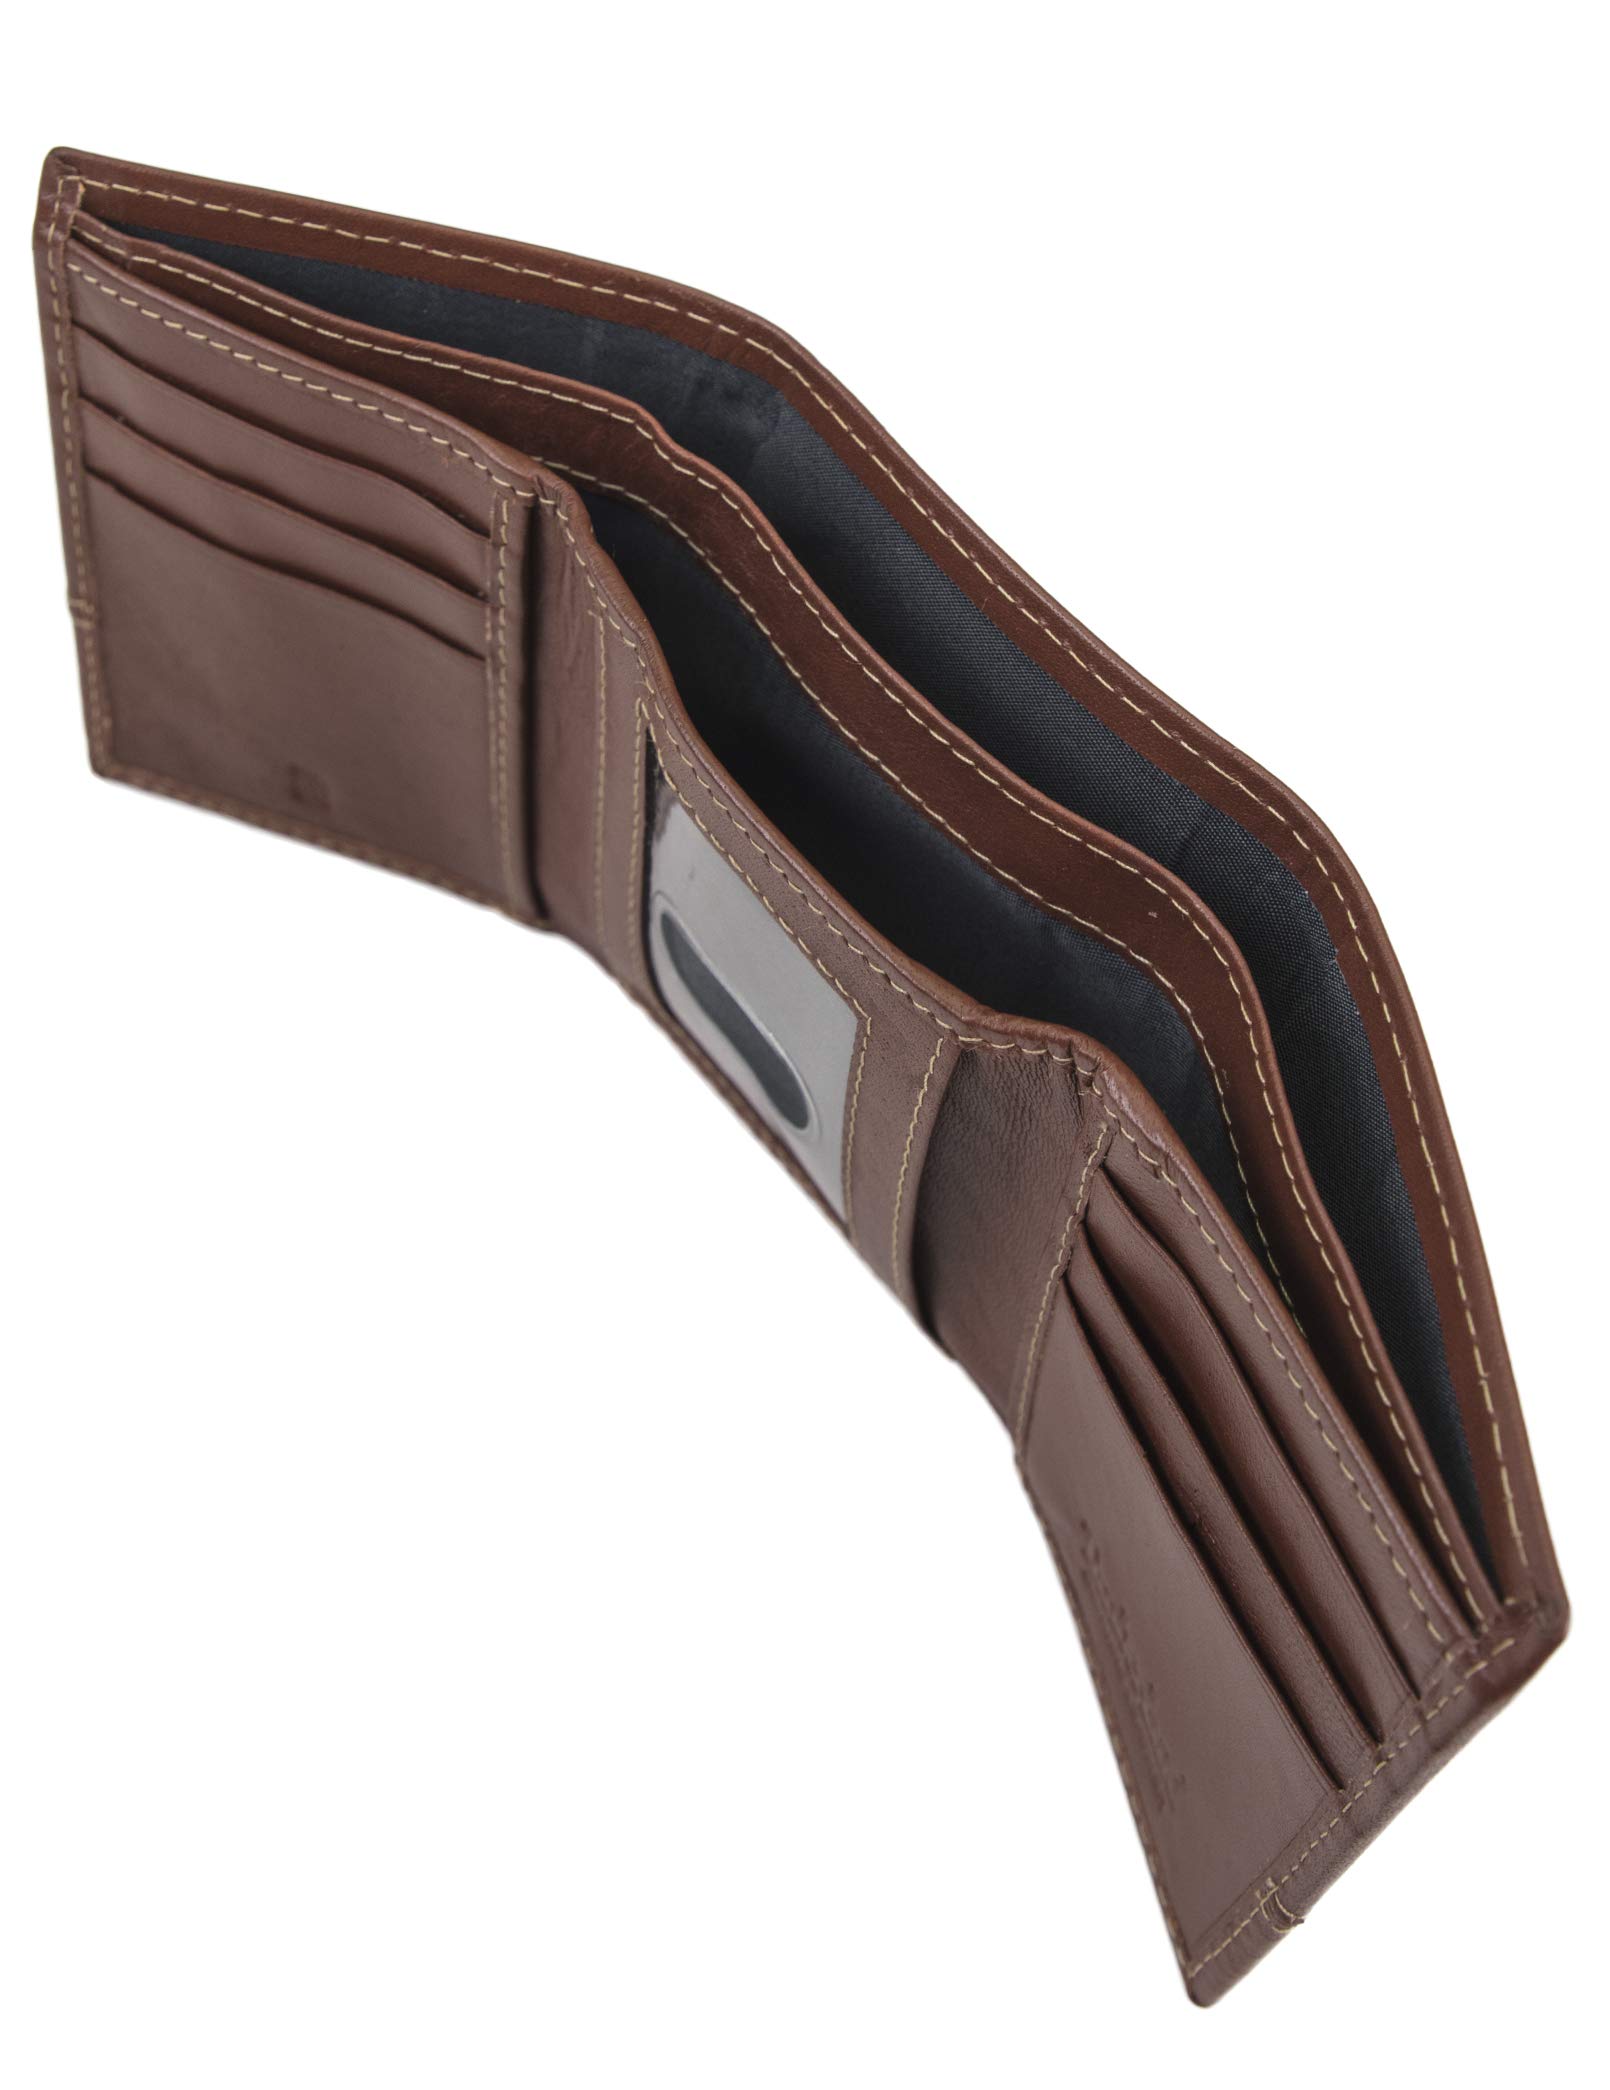 Timberland Men's Genuine Leather RFID Blocking Trifold Wallet